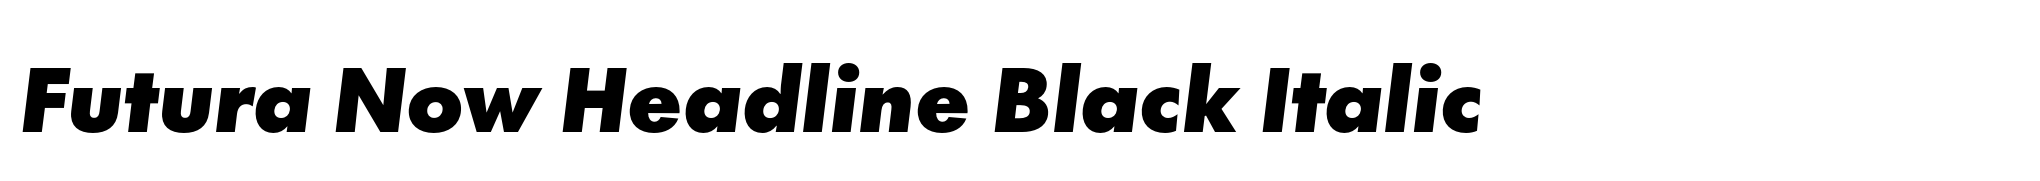 Futura Now Headline Black Italic image